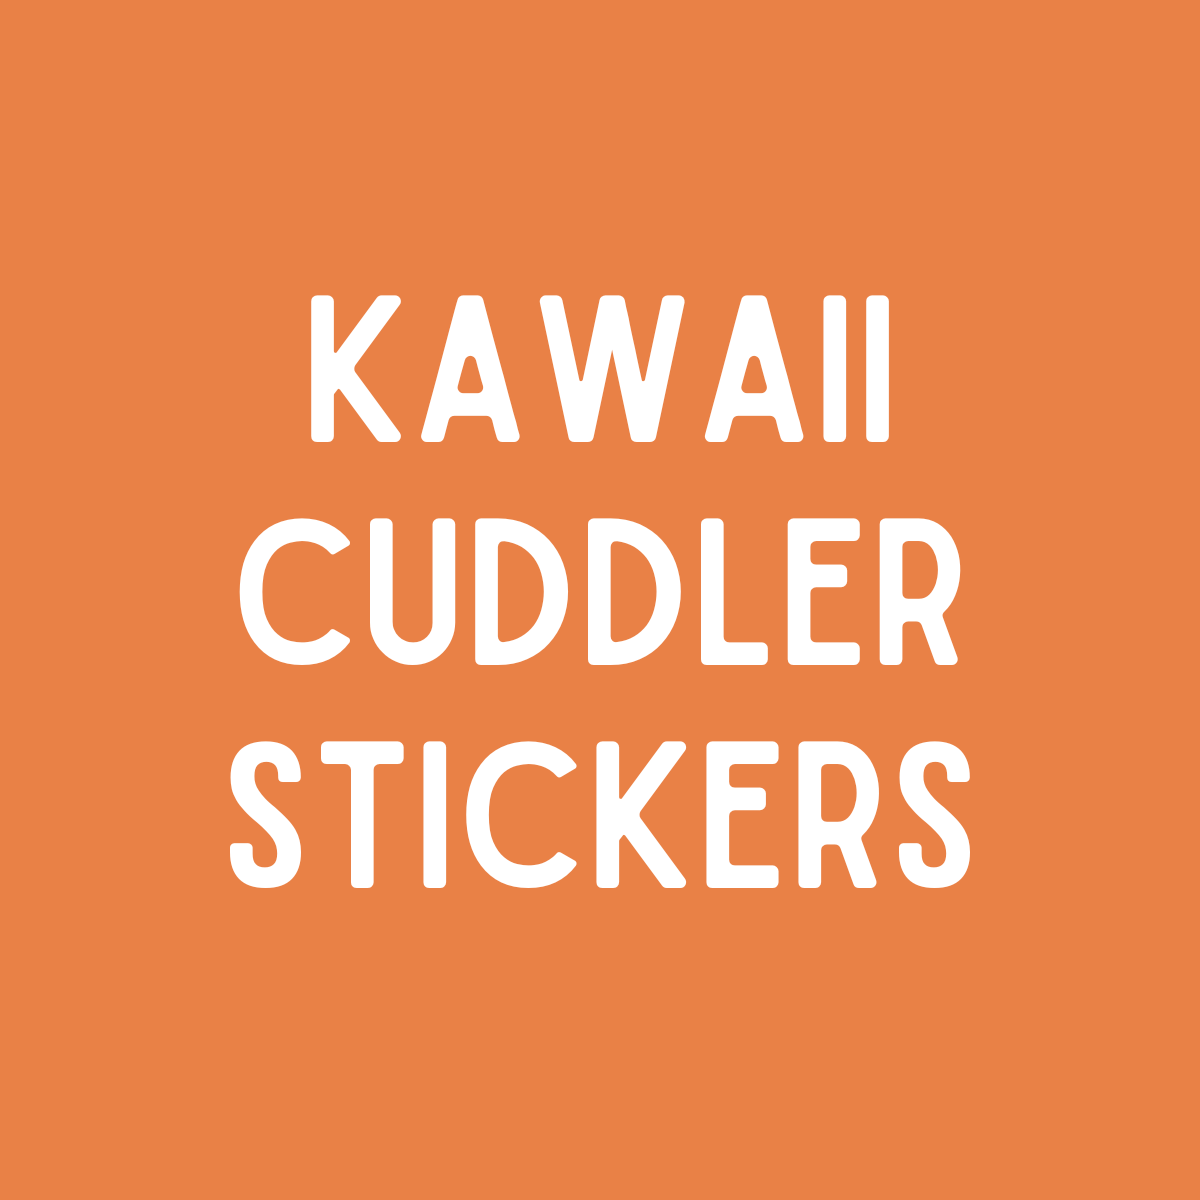 Kawaii Cuddler Stickers